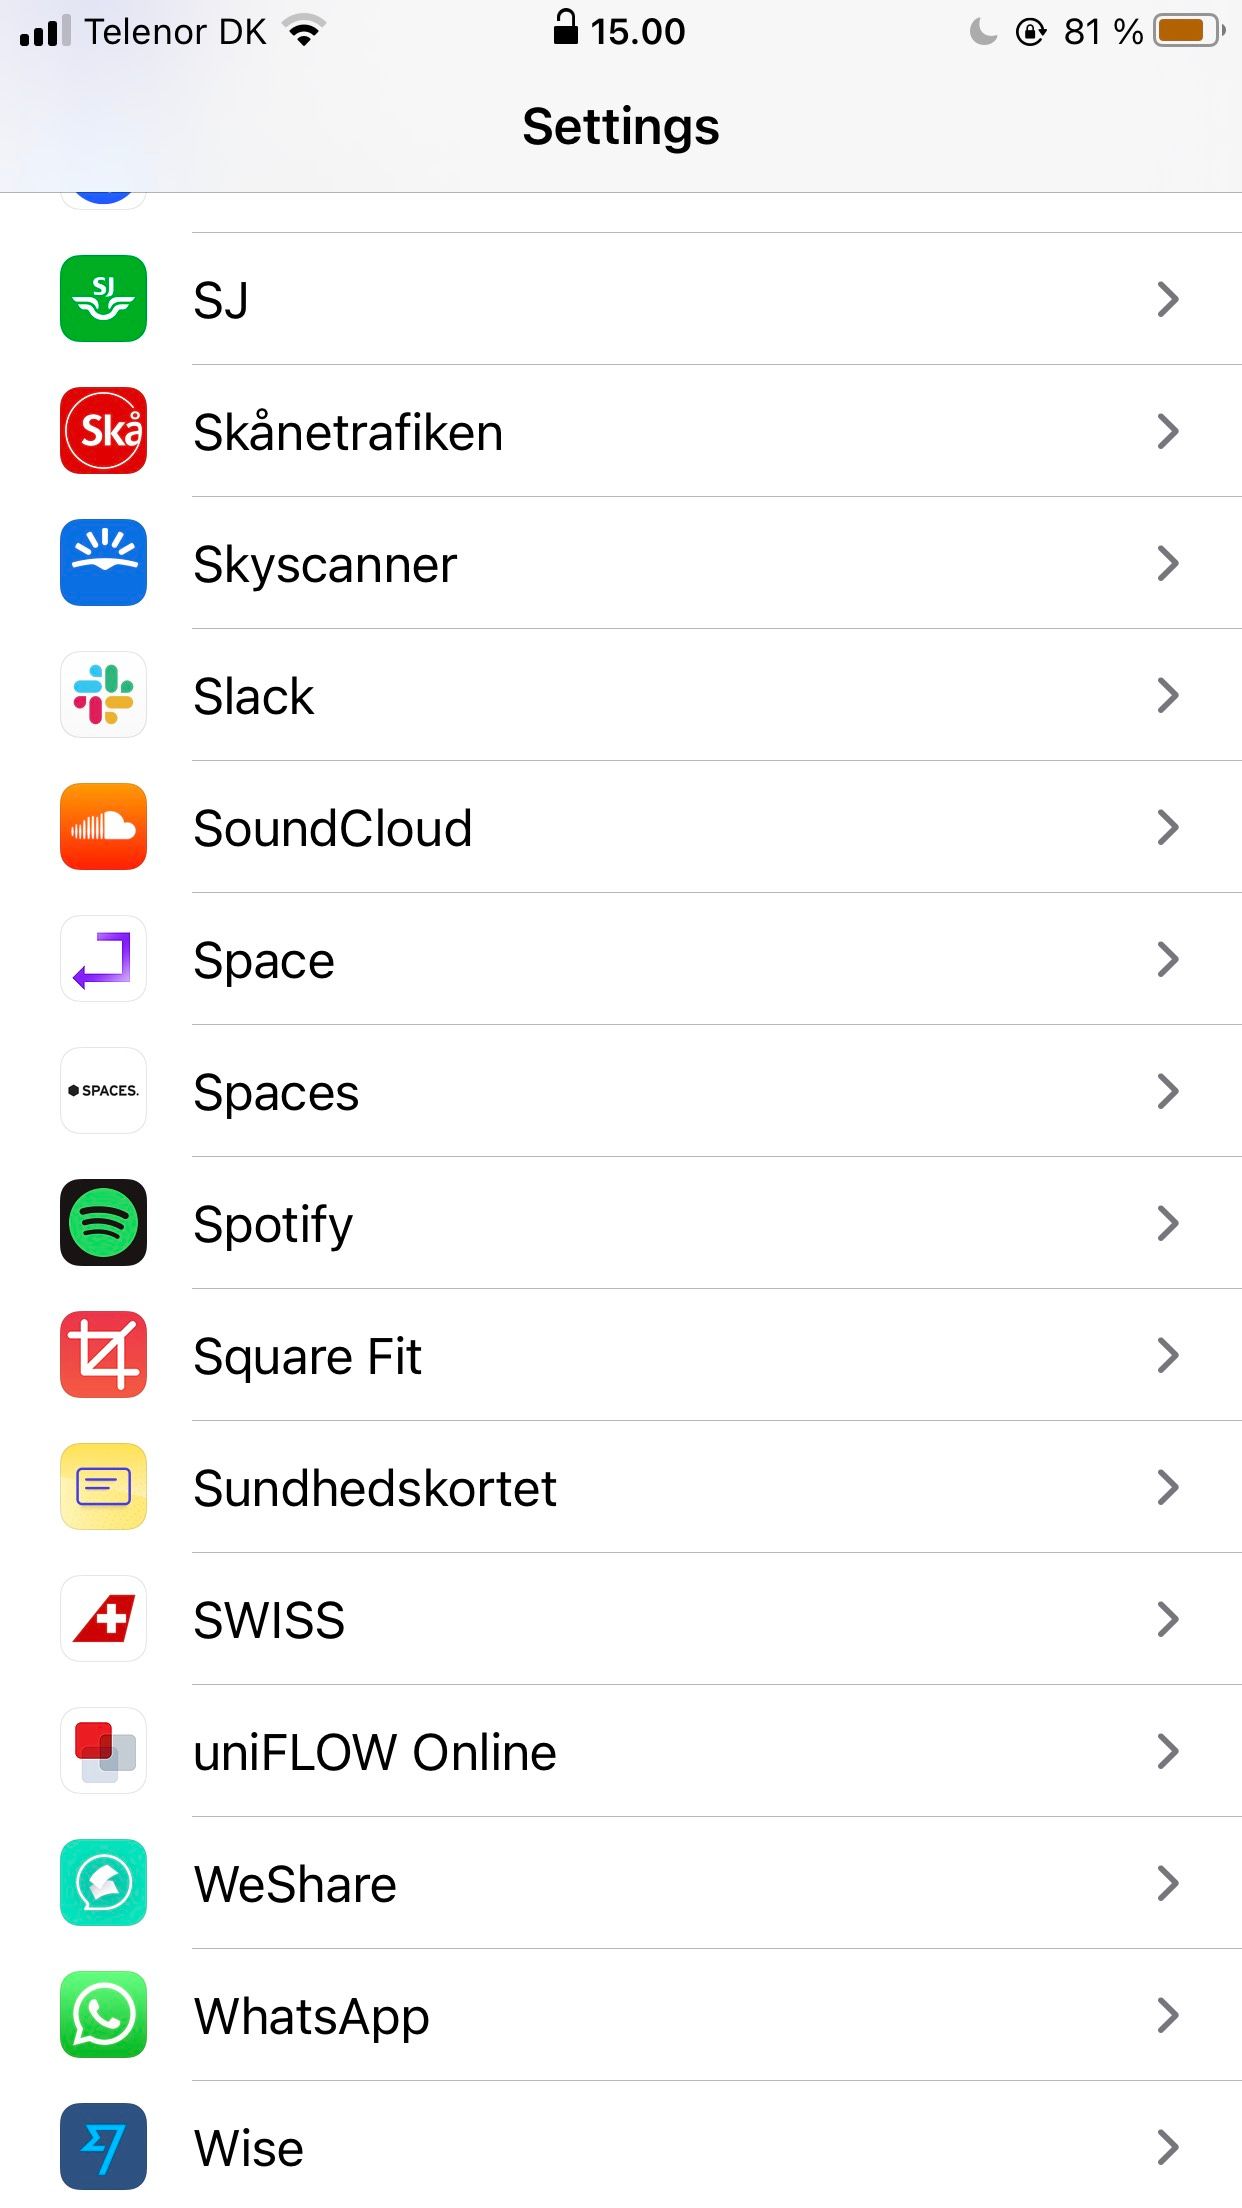 Screenshot of settings app on iPhone showing Spotify logo